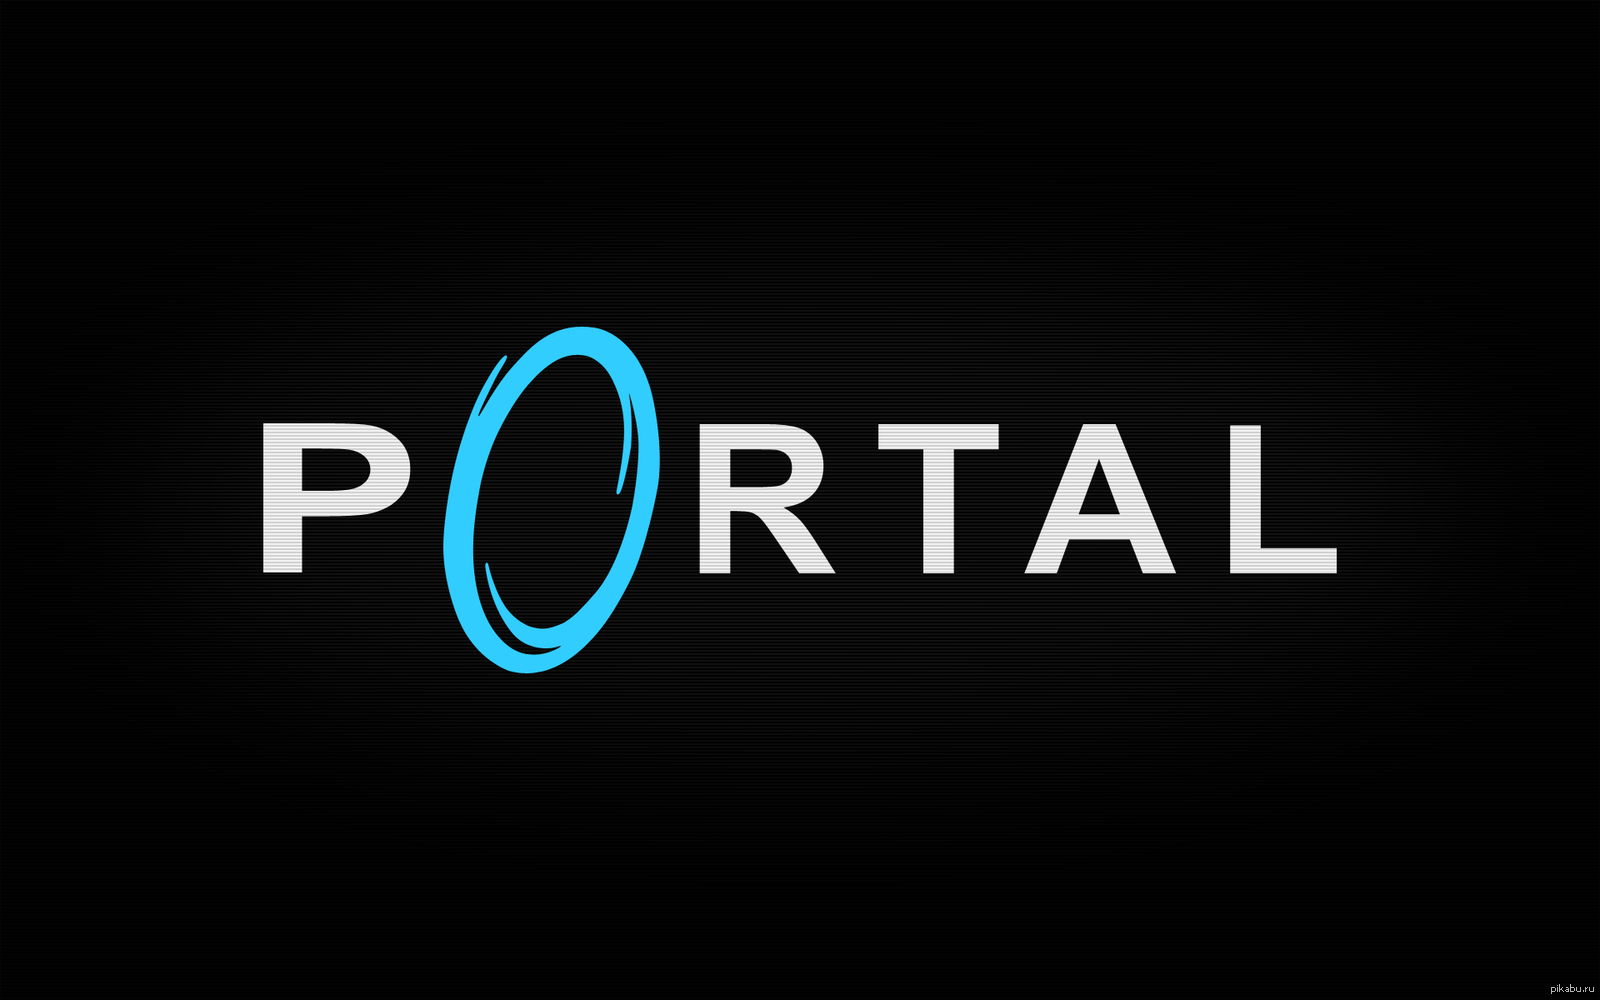 Портал. Портал логотип. Портал игра логотип. Ролтал. Портал 2 логотип.